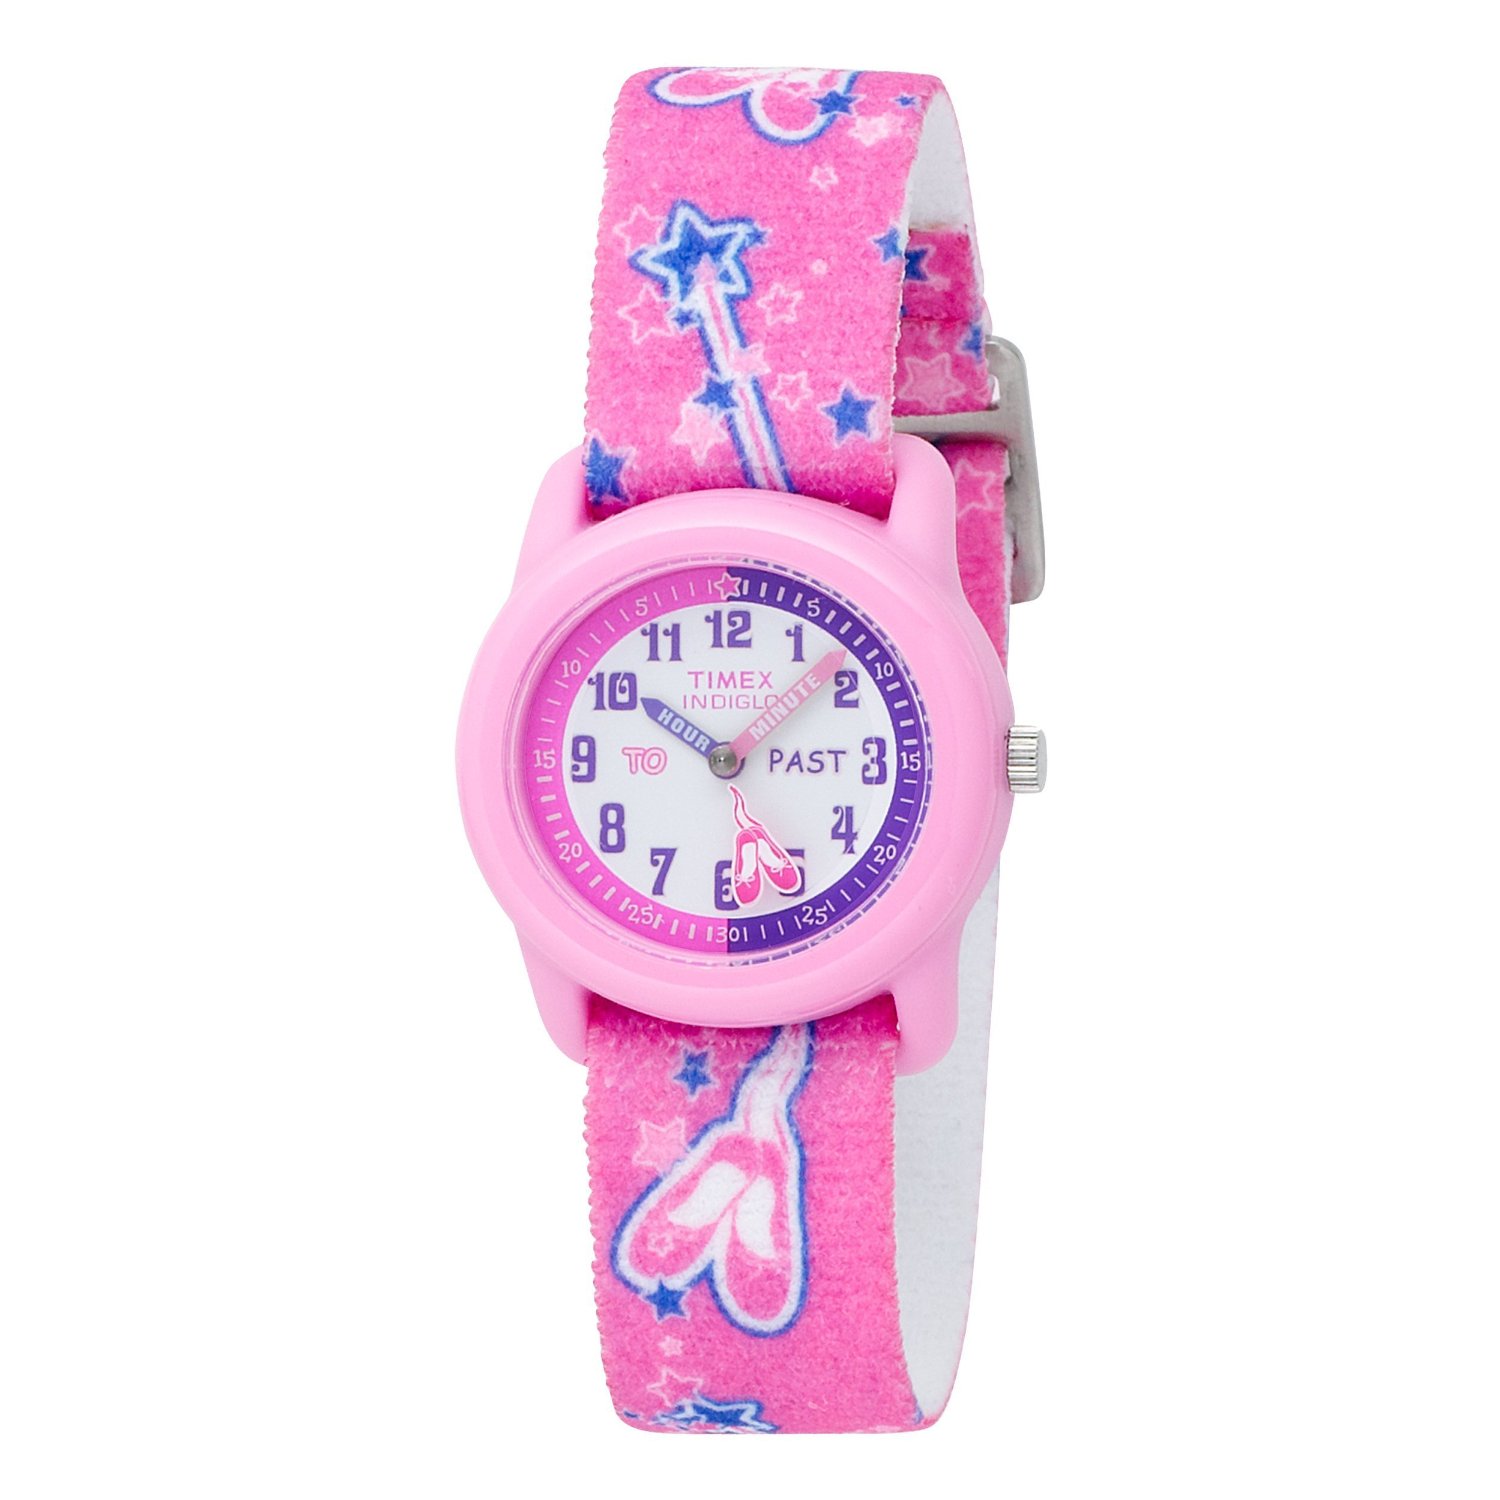 Stylish Wrist Watches For Girls